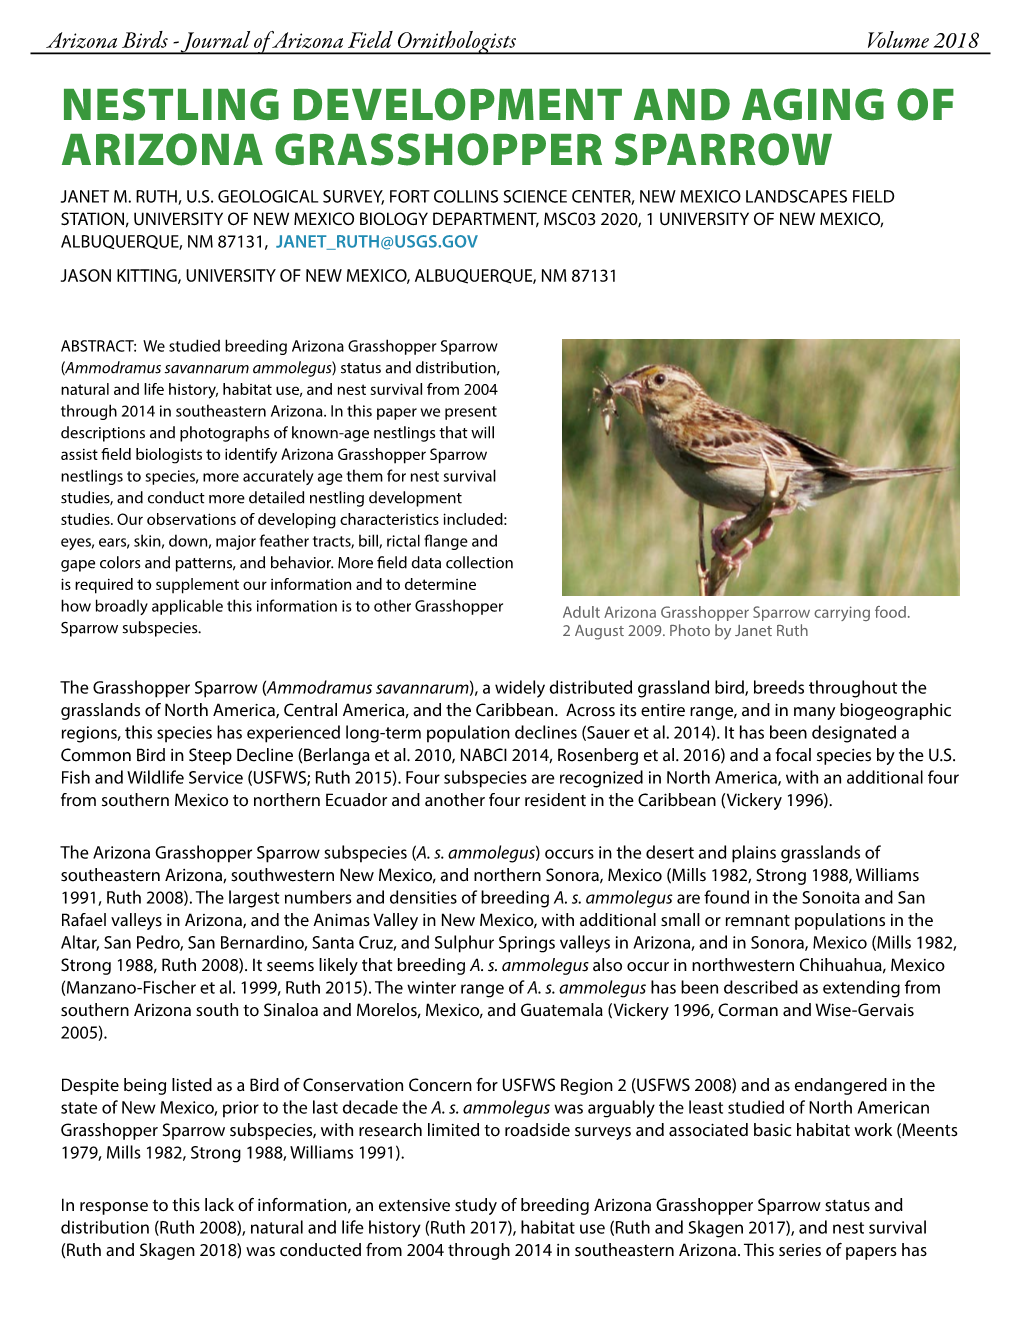 Nestling Development and Aging of Arizona Grasshopper Sparrow Janet M